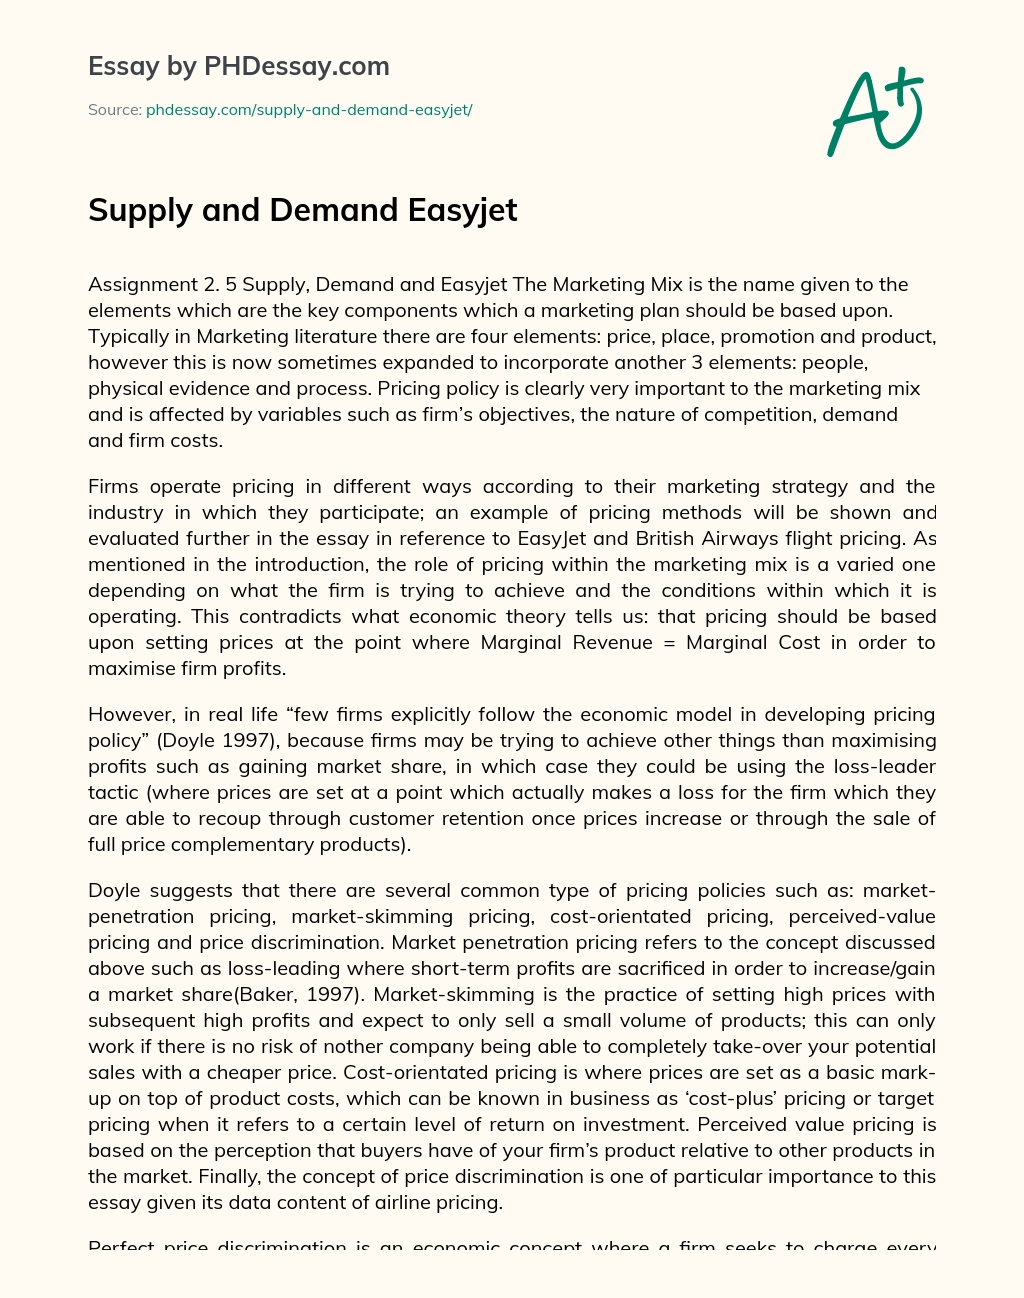 Supply and Demand Easyjet essay